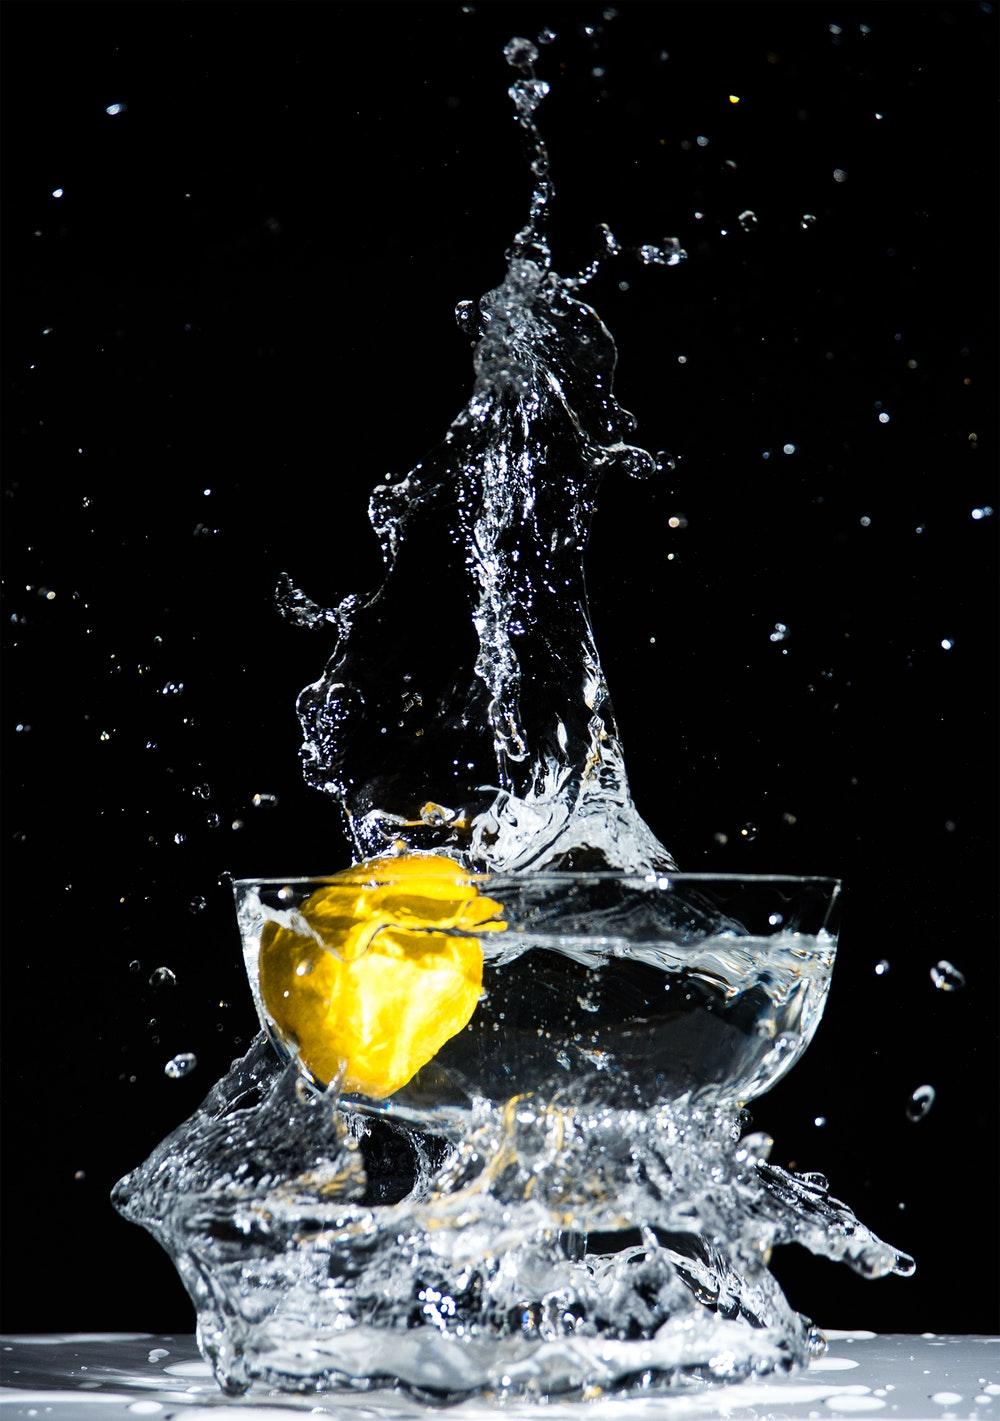 Water Splash Picture [HD]. Download Free Image